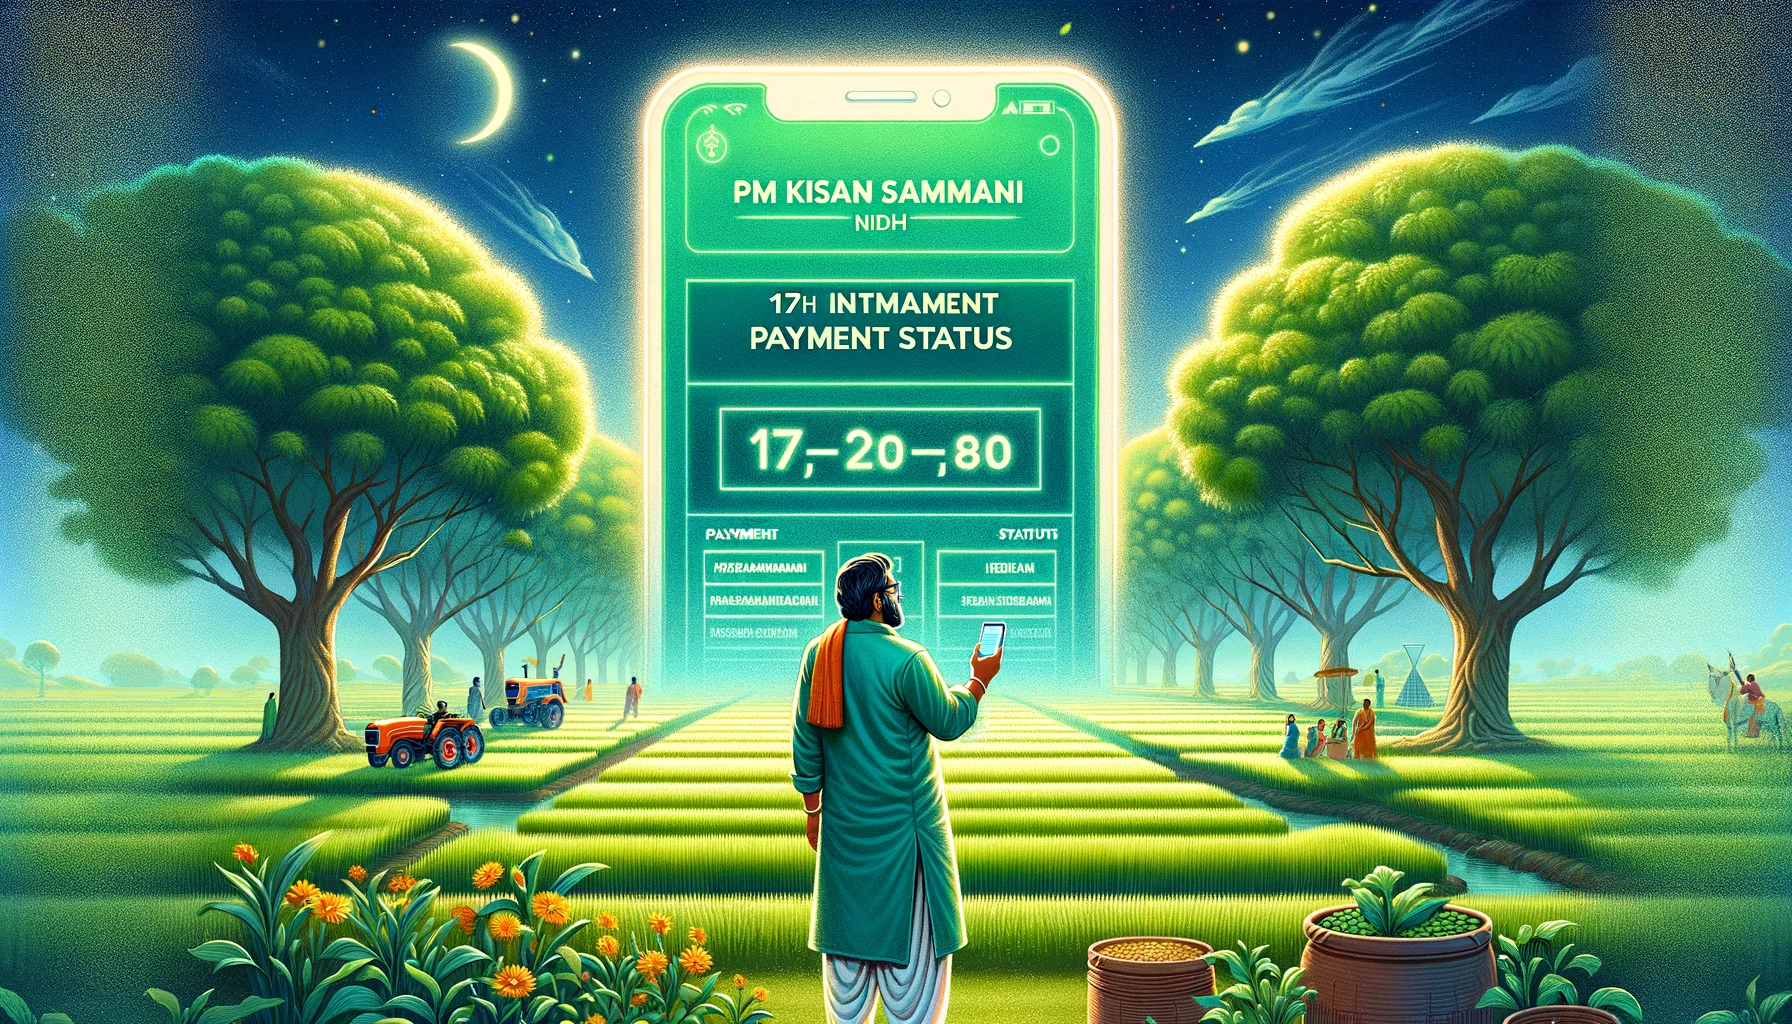 PM Kisan Samman Nidhi 17th Installment Payment Status